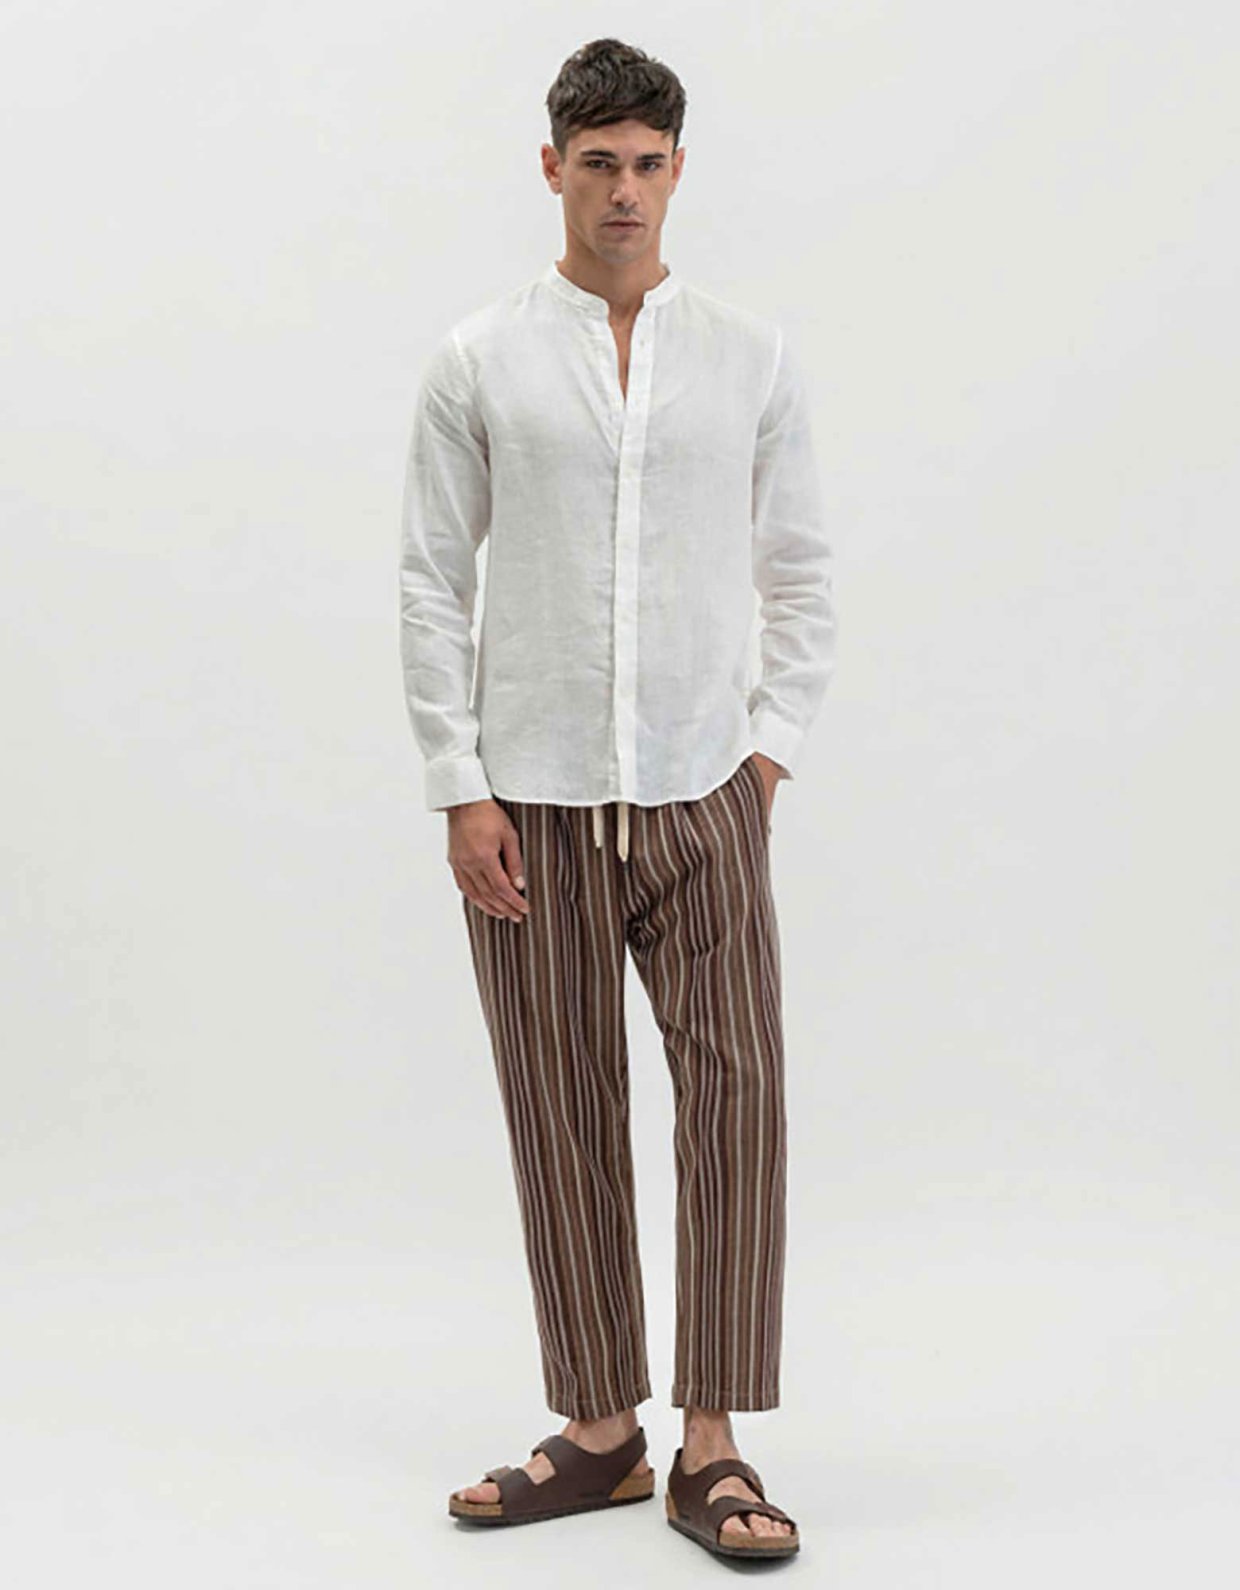 Gianni Lupo Mao collar linen shirt white